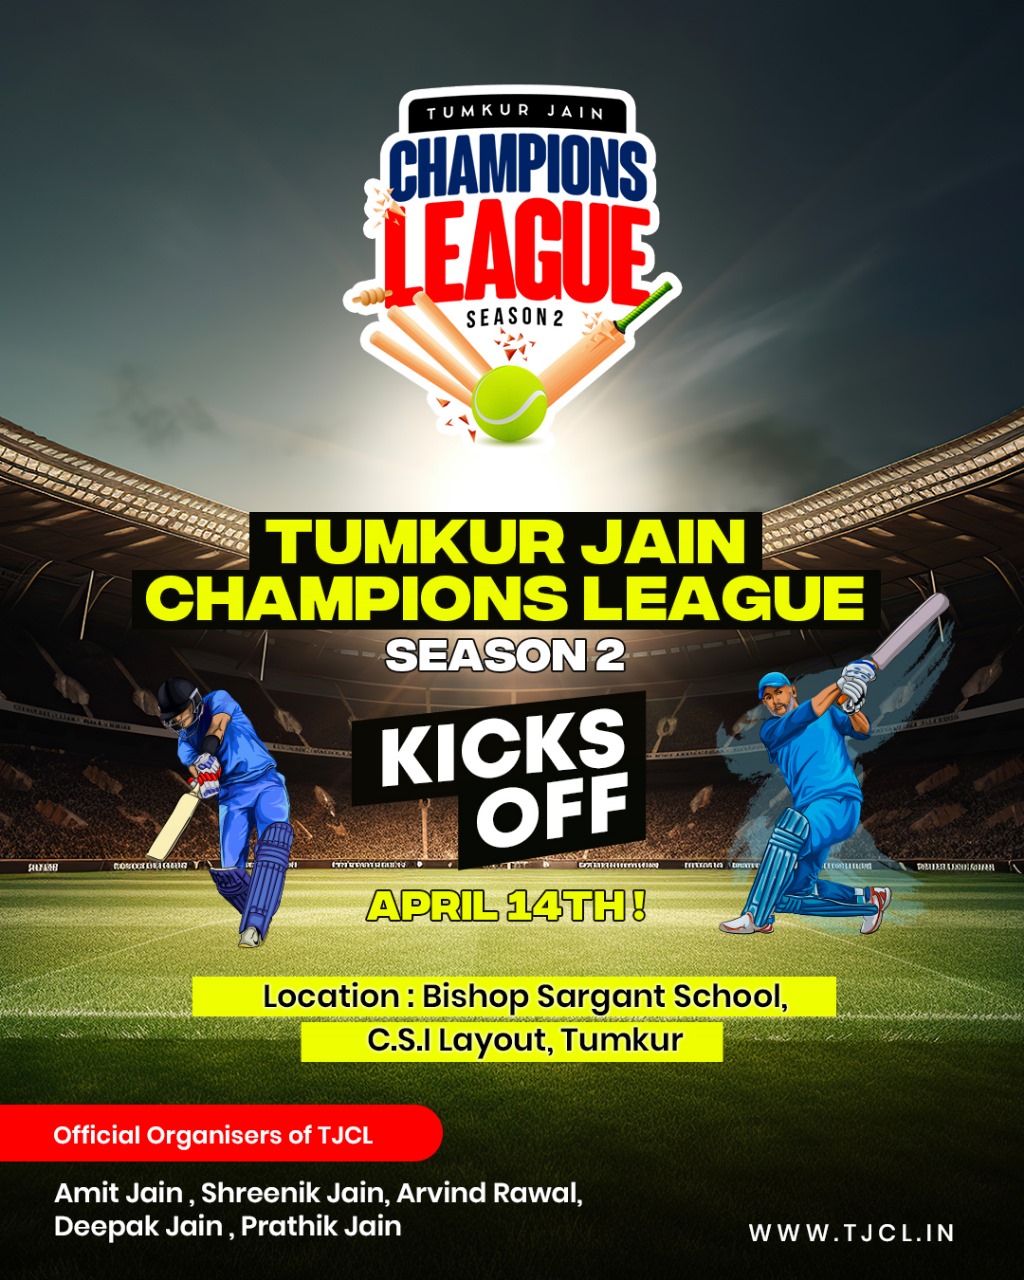 Tumkur Jain Champions League Season 2 Kicks Off with Thrilling Short Boundary Tournament